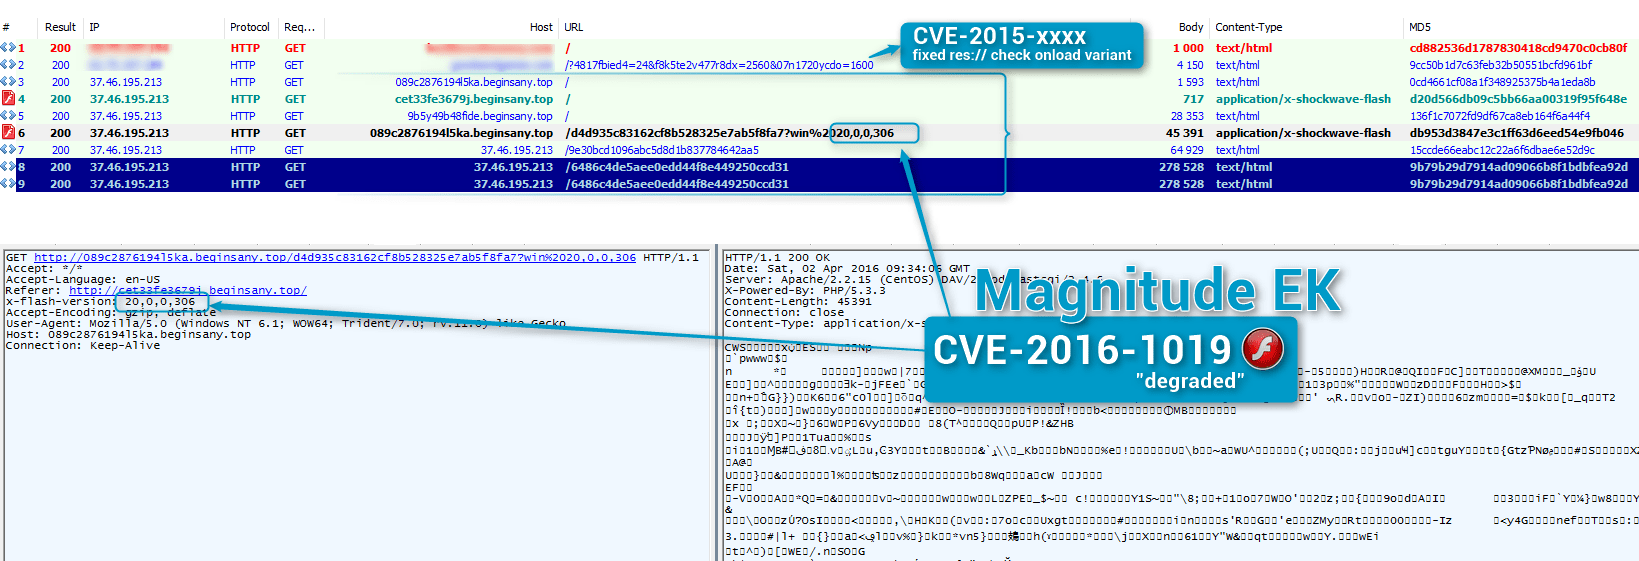 Magnitude exploiting CVE-2016-1019 to spread ransomware